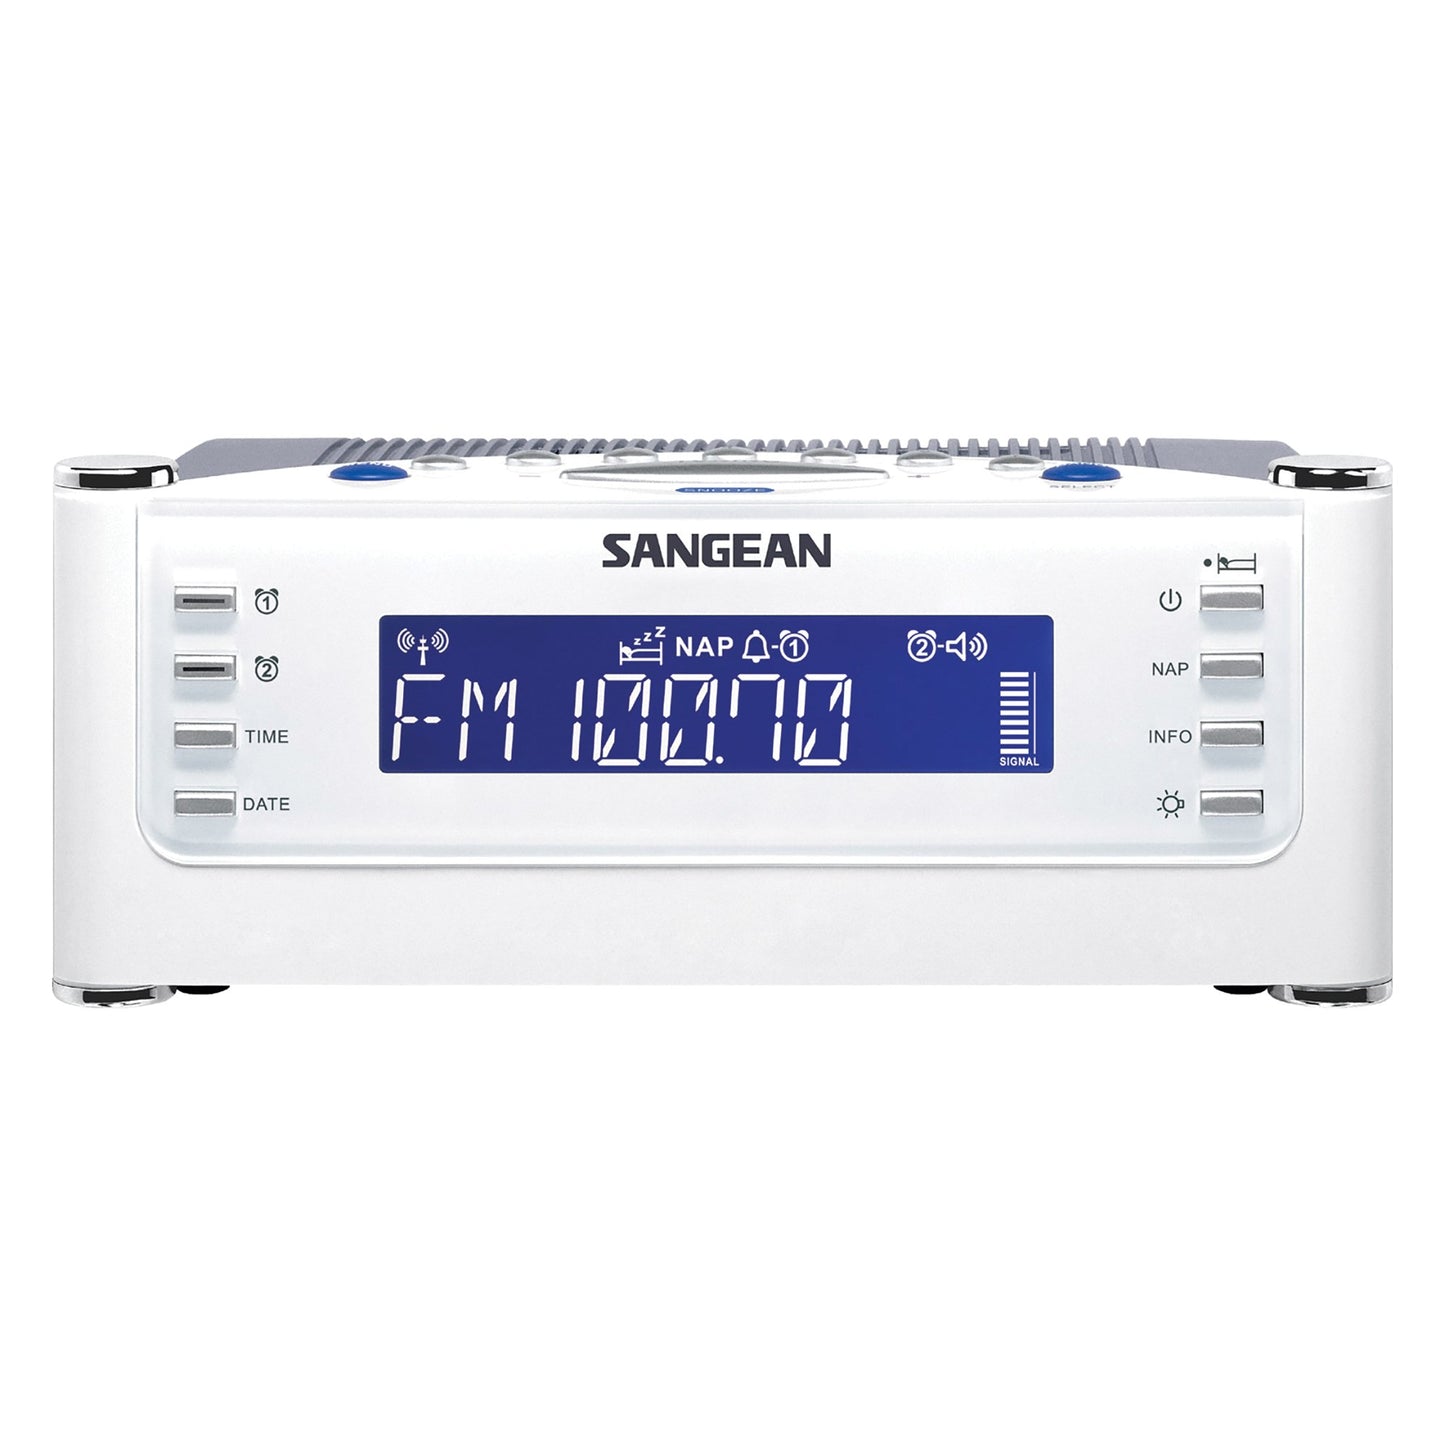 SANGEAN SNGRCR22 AM/FM Atomic Clock Radio with LCD Display